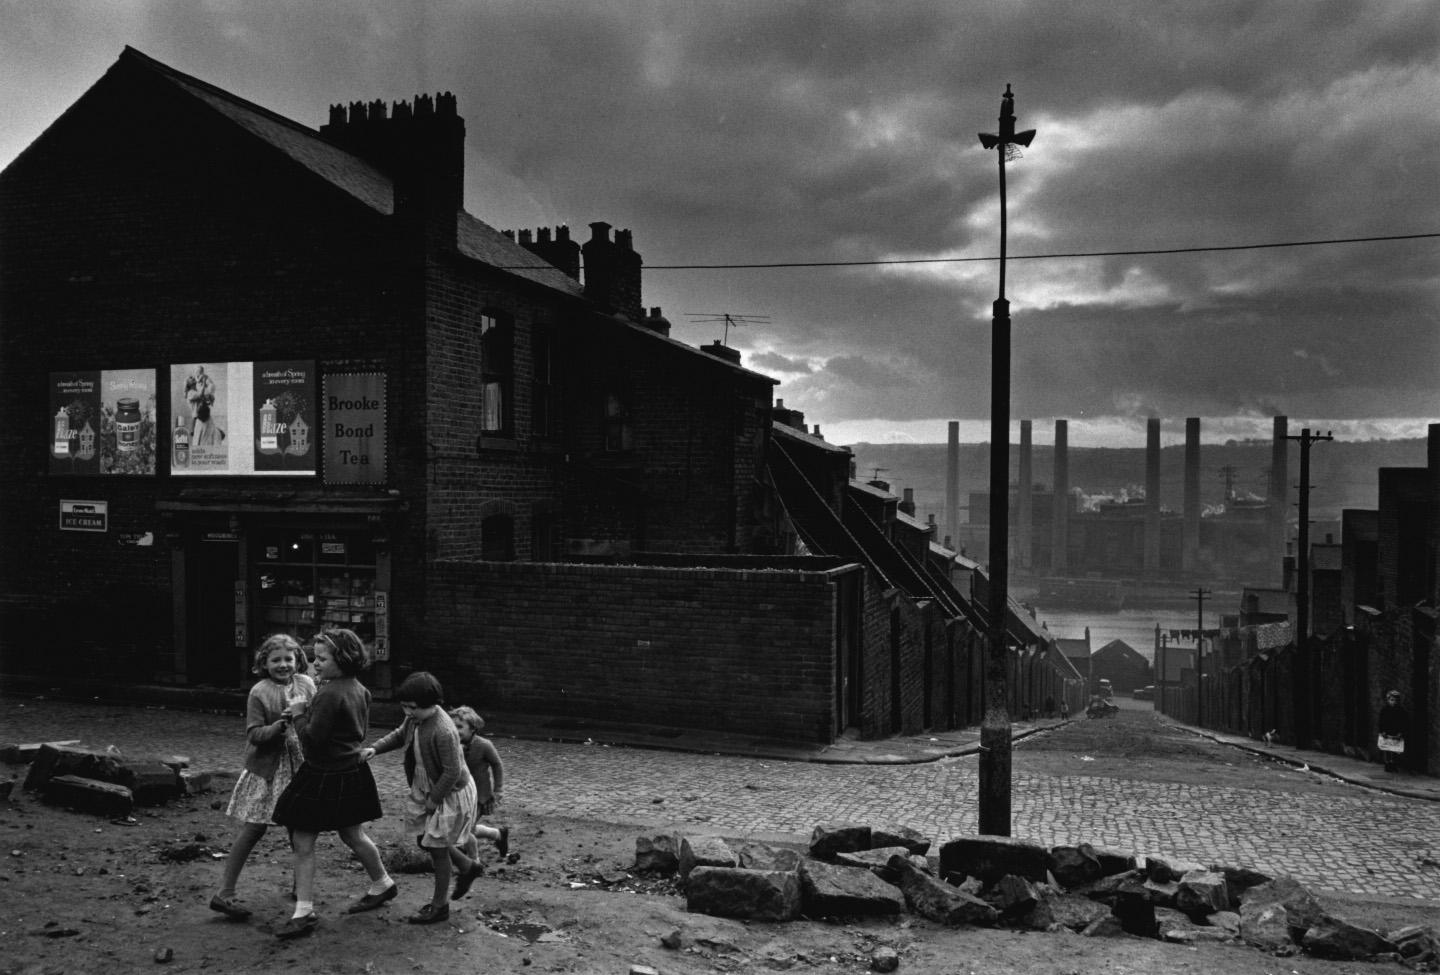 Colin Jones Black and White Photograph - Coal-searchers on a slagheap, Sunderland, England 1962